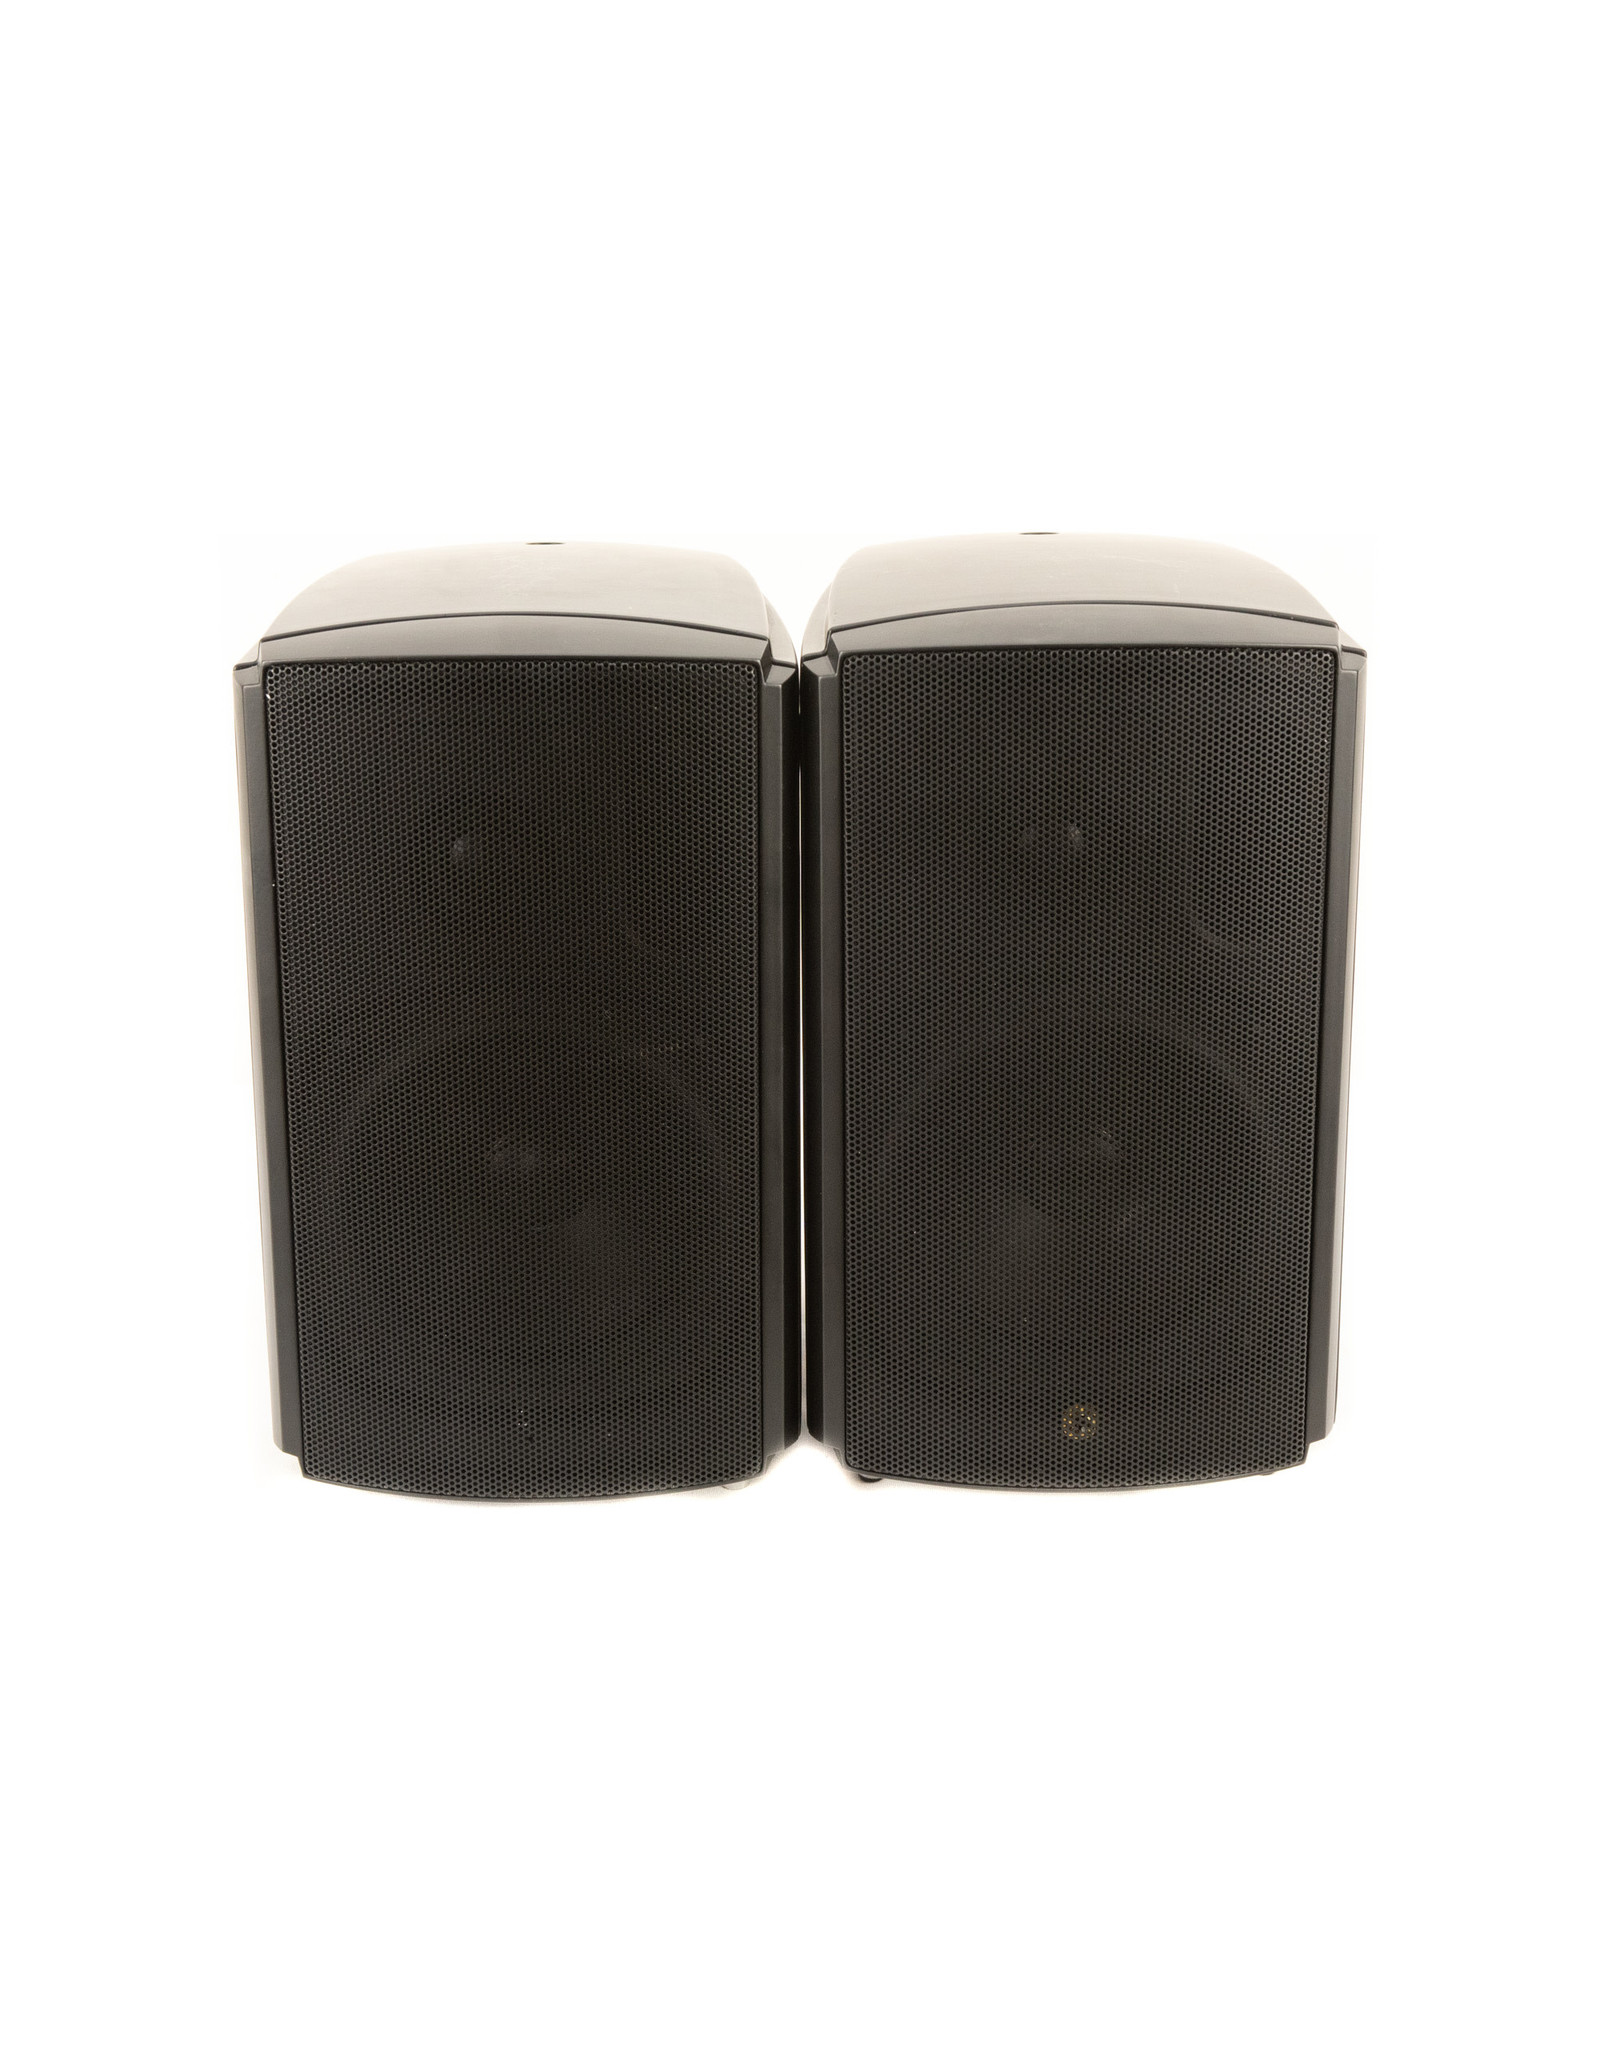 Boston Acoustics Boston Acoustics Micro 100x Bookshelf Speakers USED